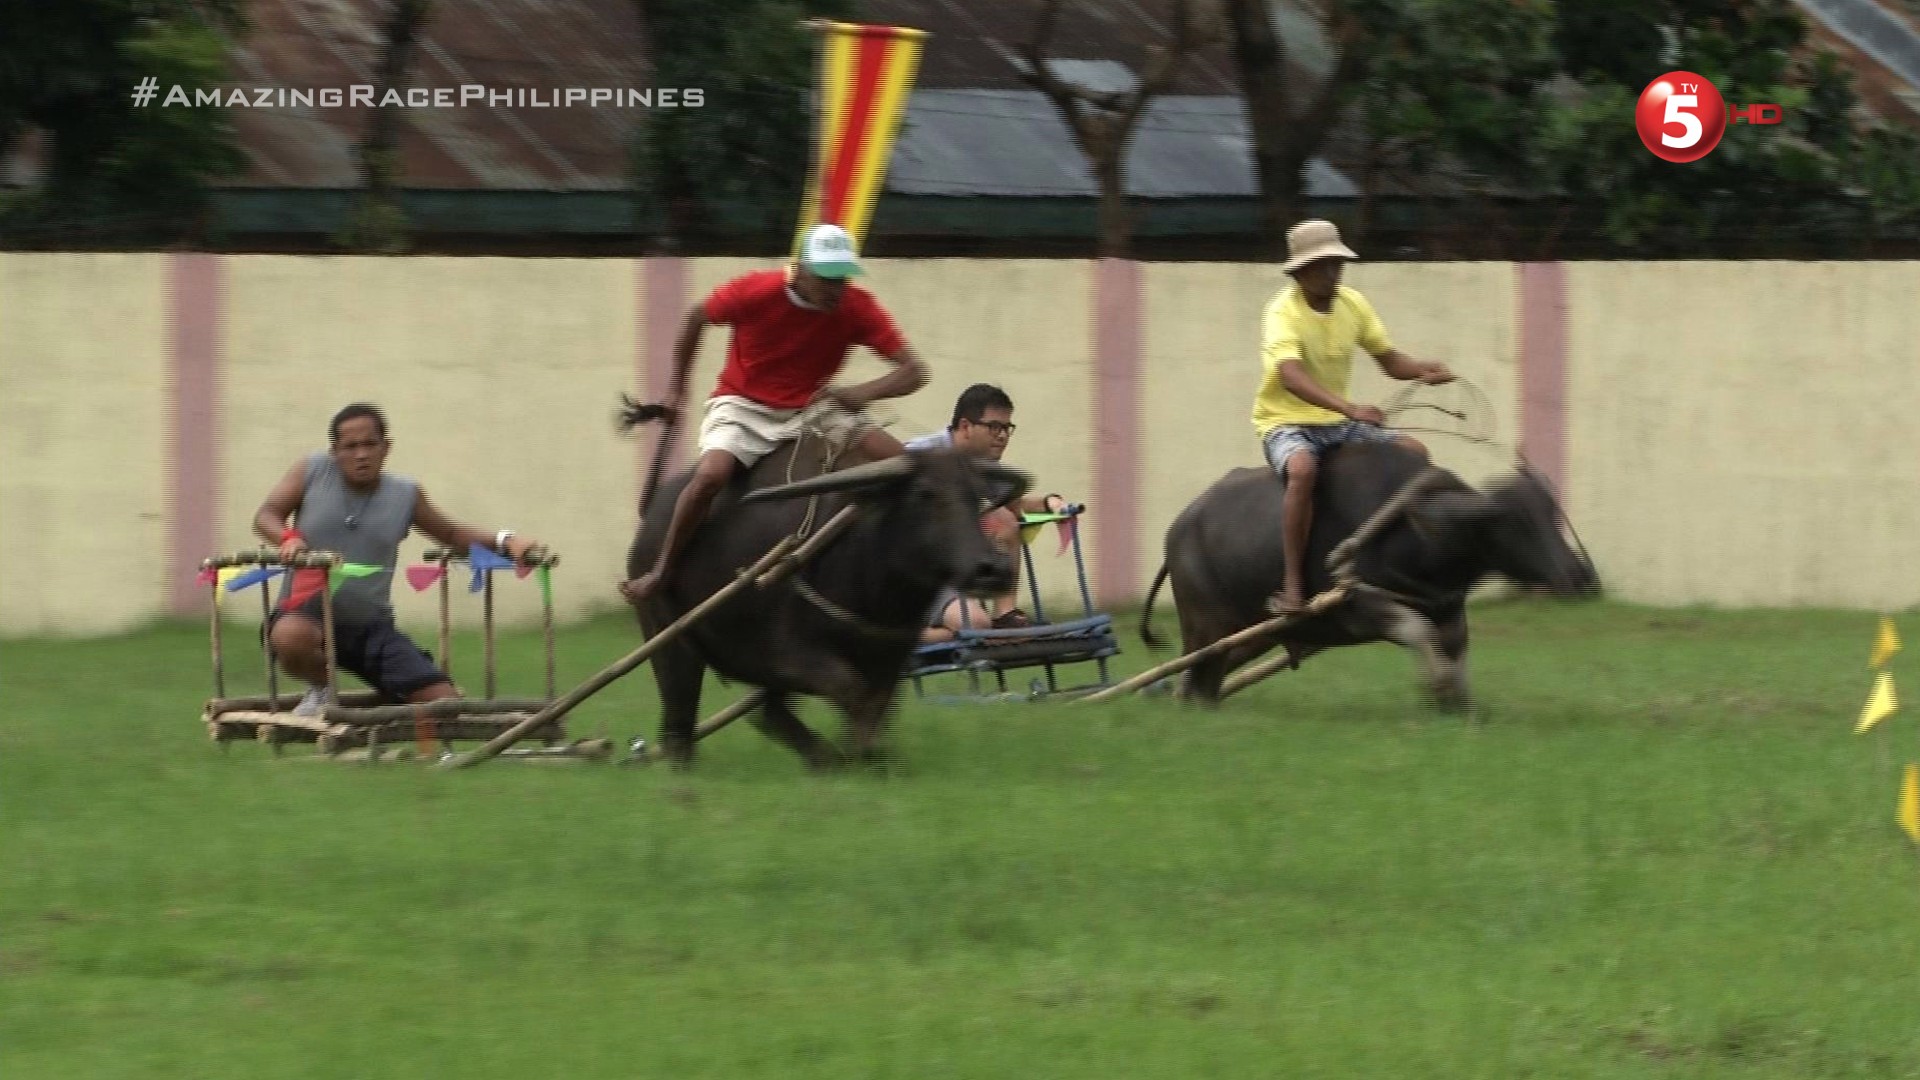 Recap: The Amazing Race Philippines 2, Episode 43 – Leg 8, Day 1 – "Wag kang umupo on your ass."